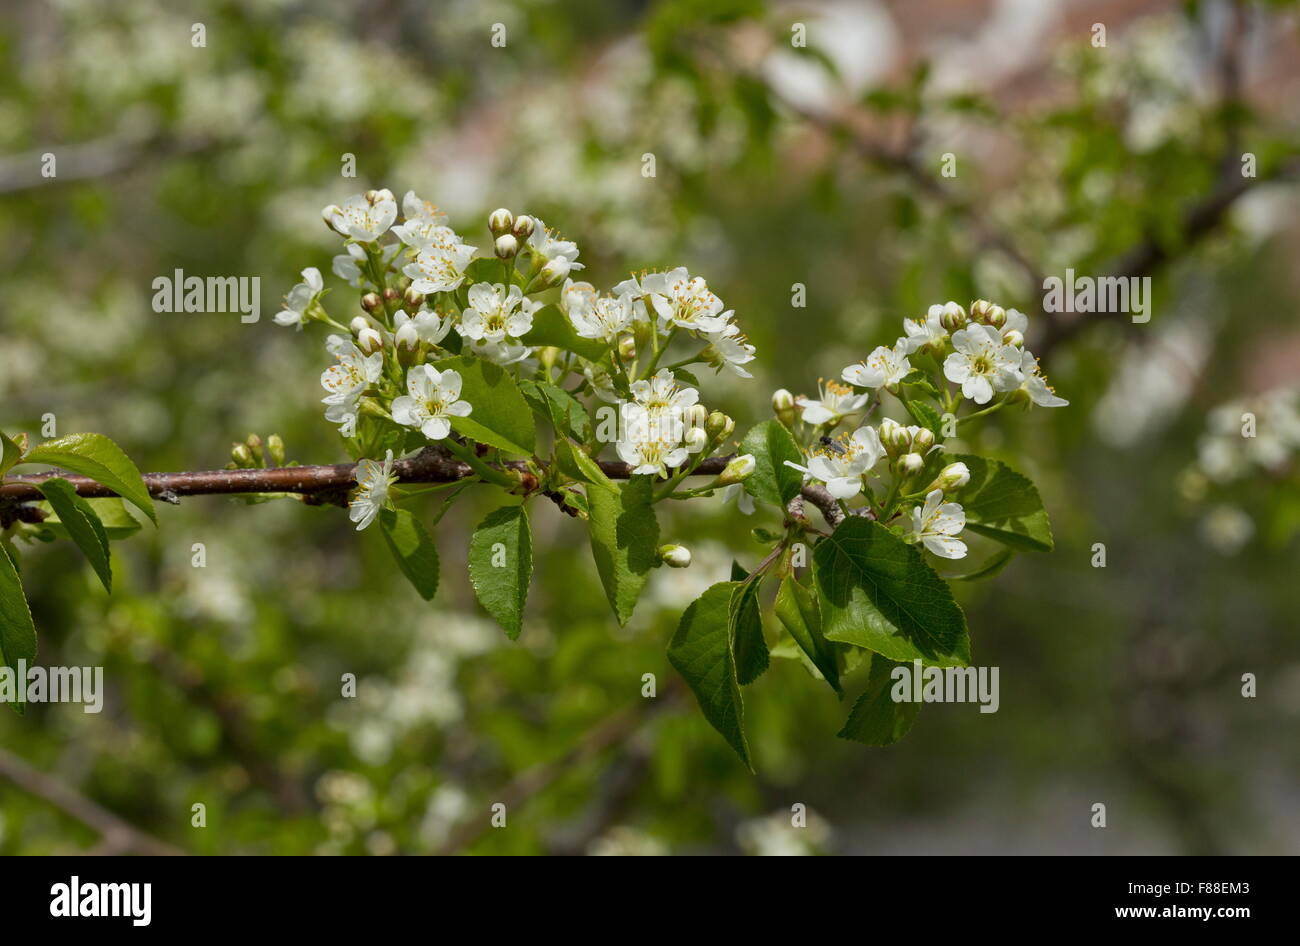 St Lucie cherry, Prunus mahaleb, in flower. Spain. Stock Photo